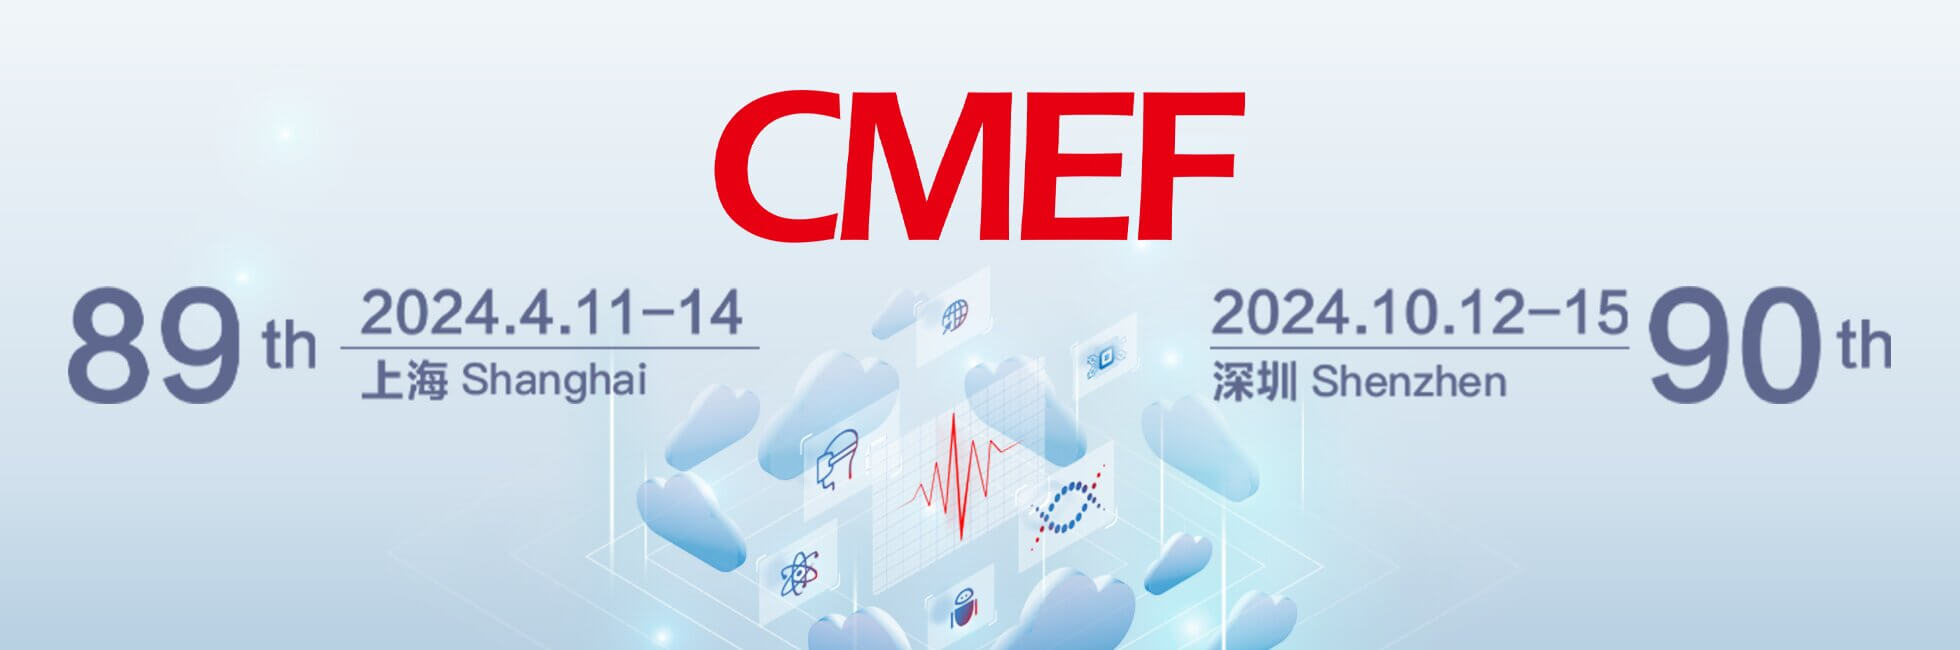 We will attend CMEF 2024 in...